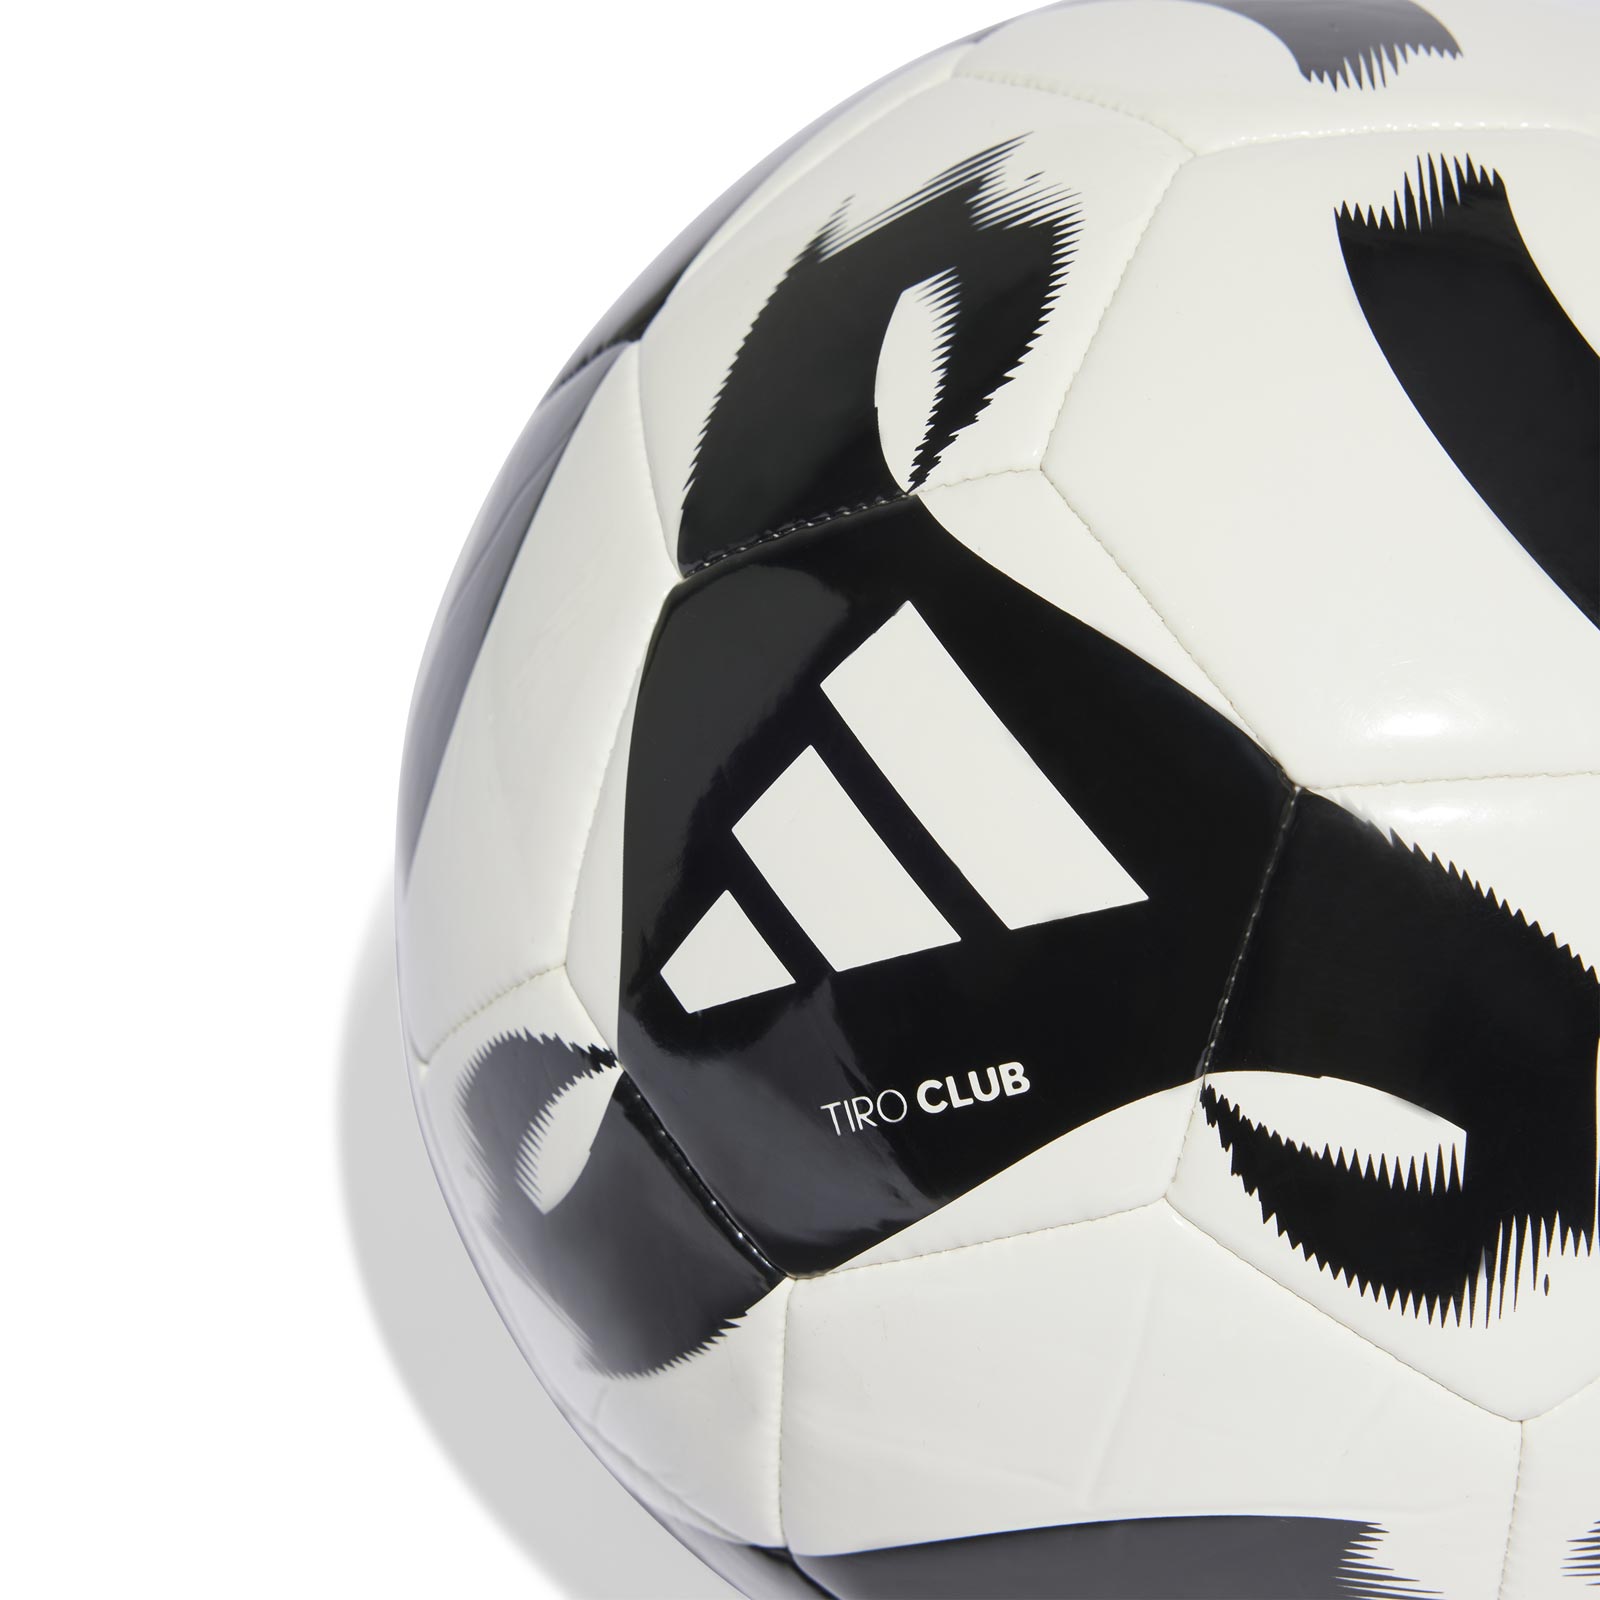 Adidas Tiro Club Football - Size 5